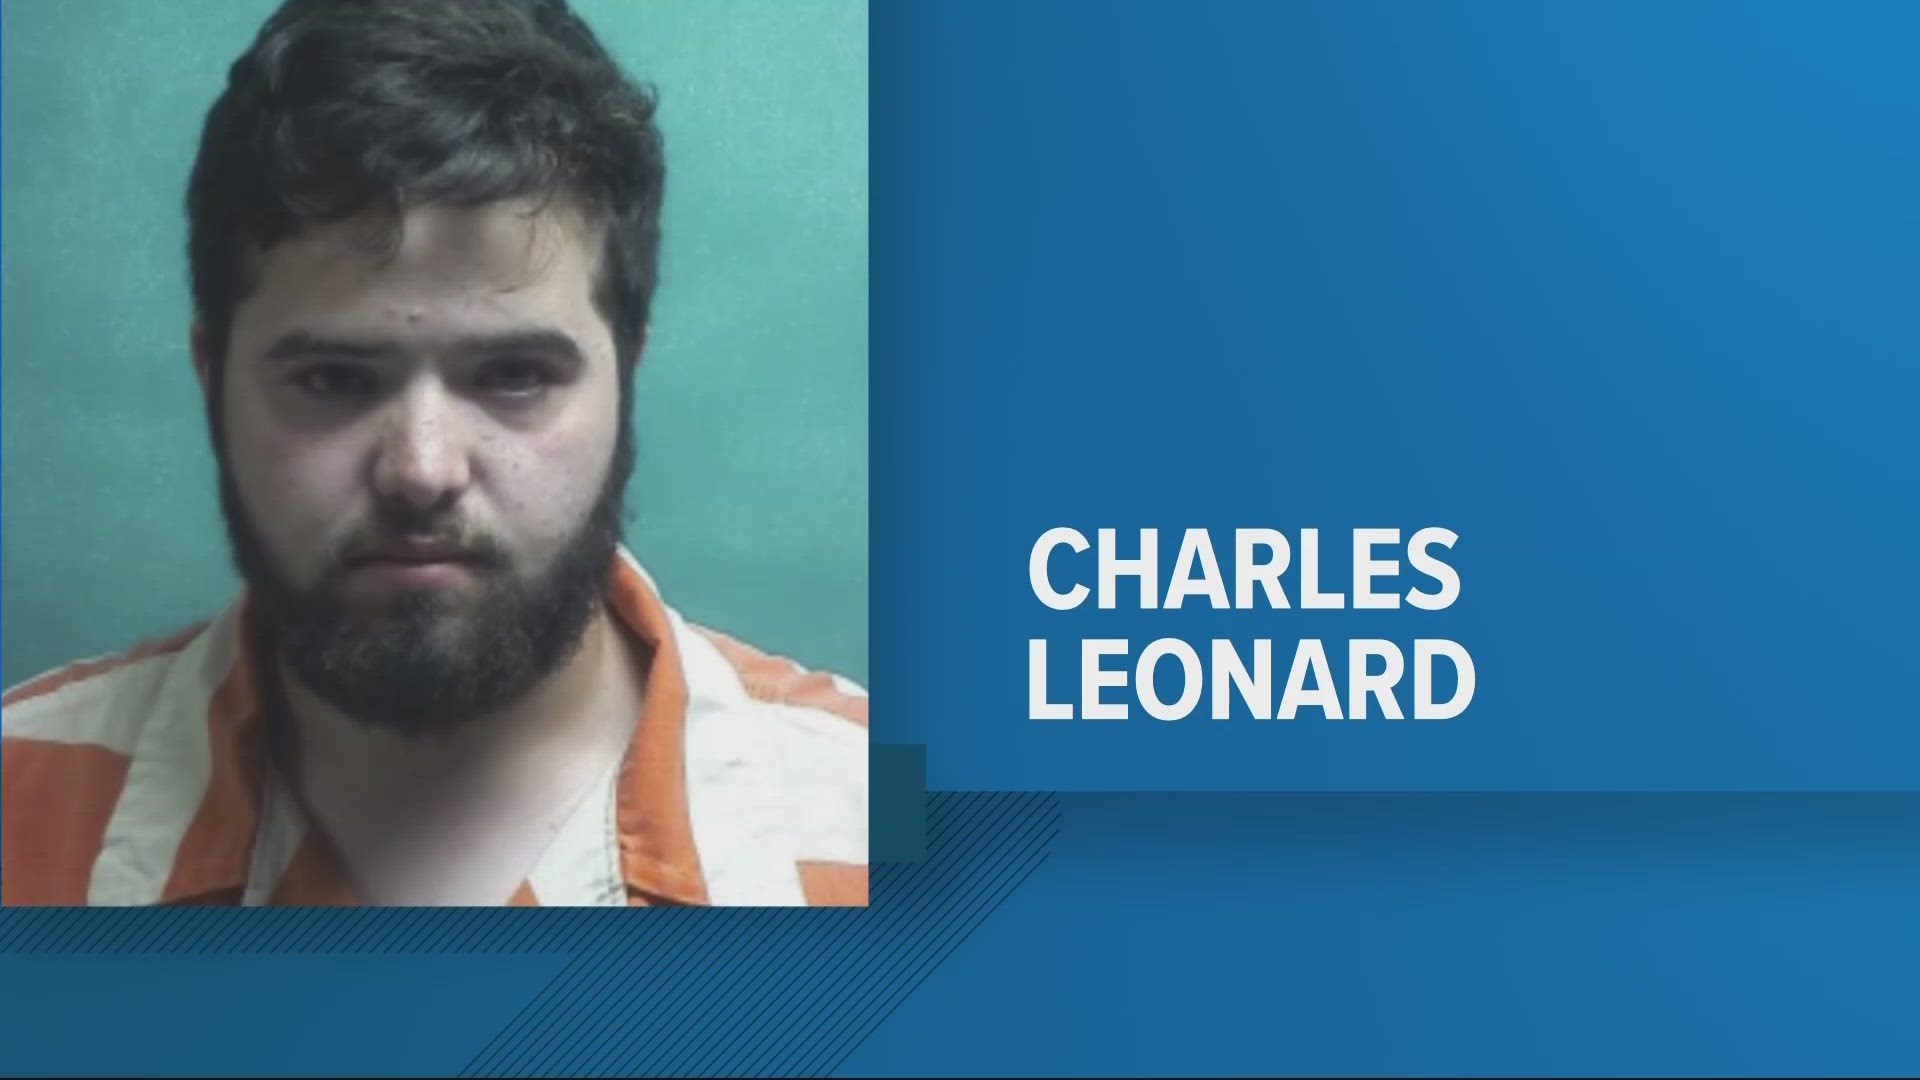 Charles Leonard is 19-year-old.